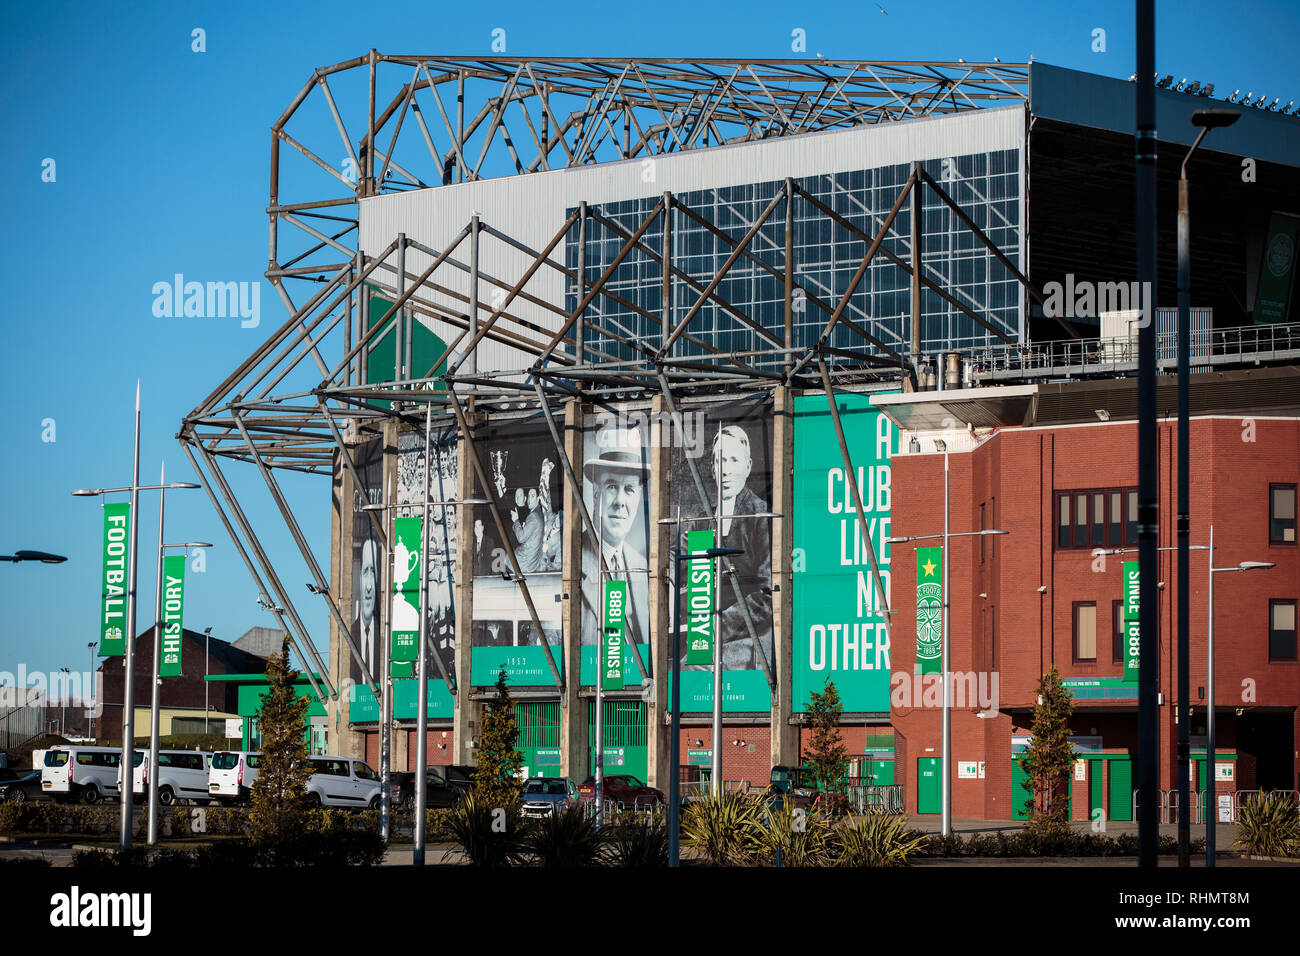 Glasgow Celtic Football Club Stadium Stock Photo